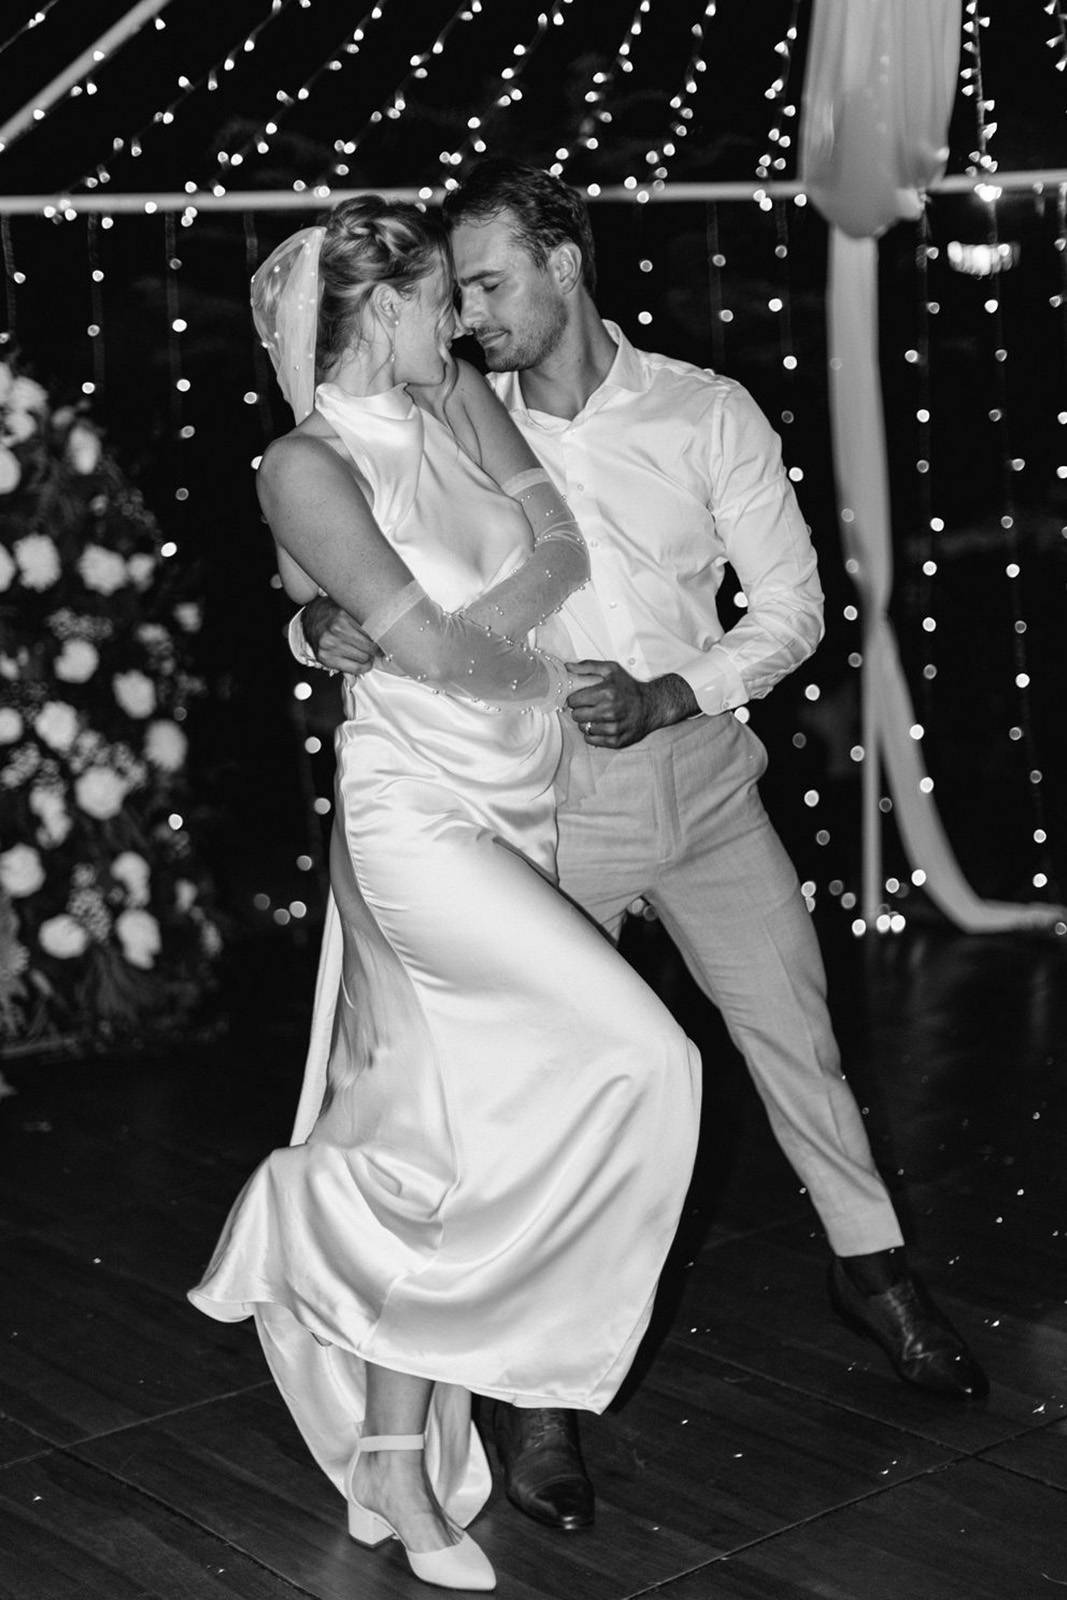 Bride and groom dancing together